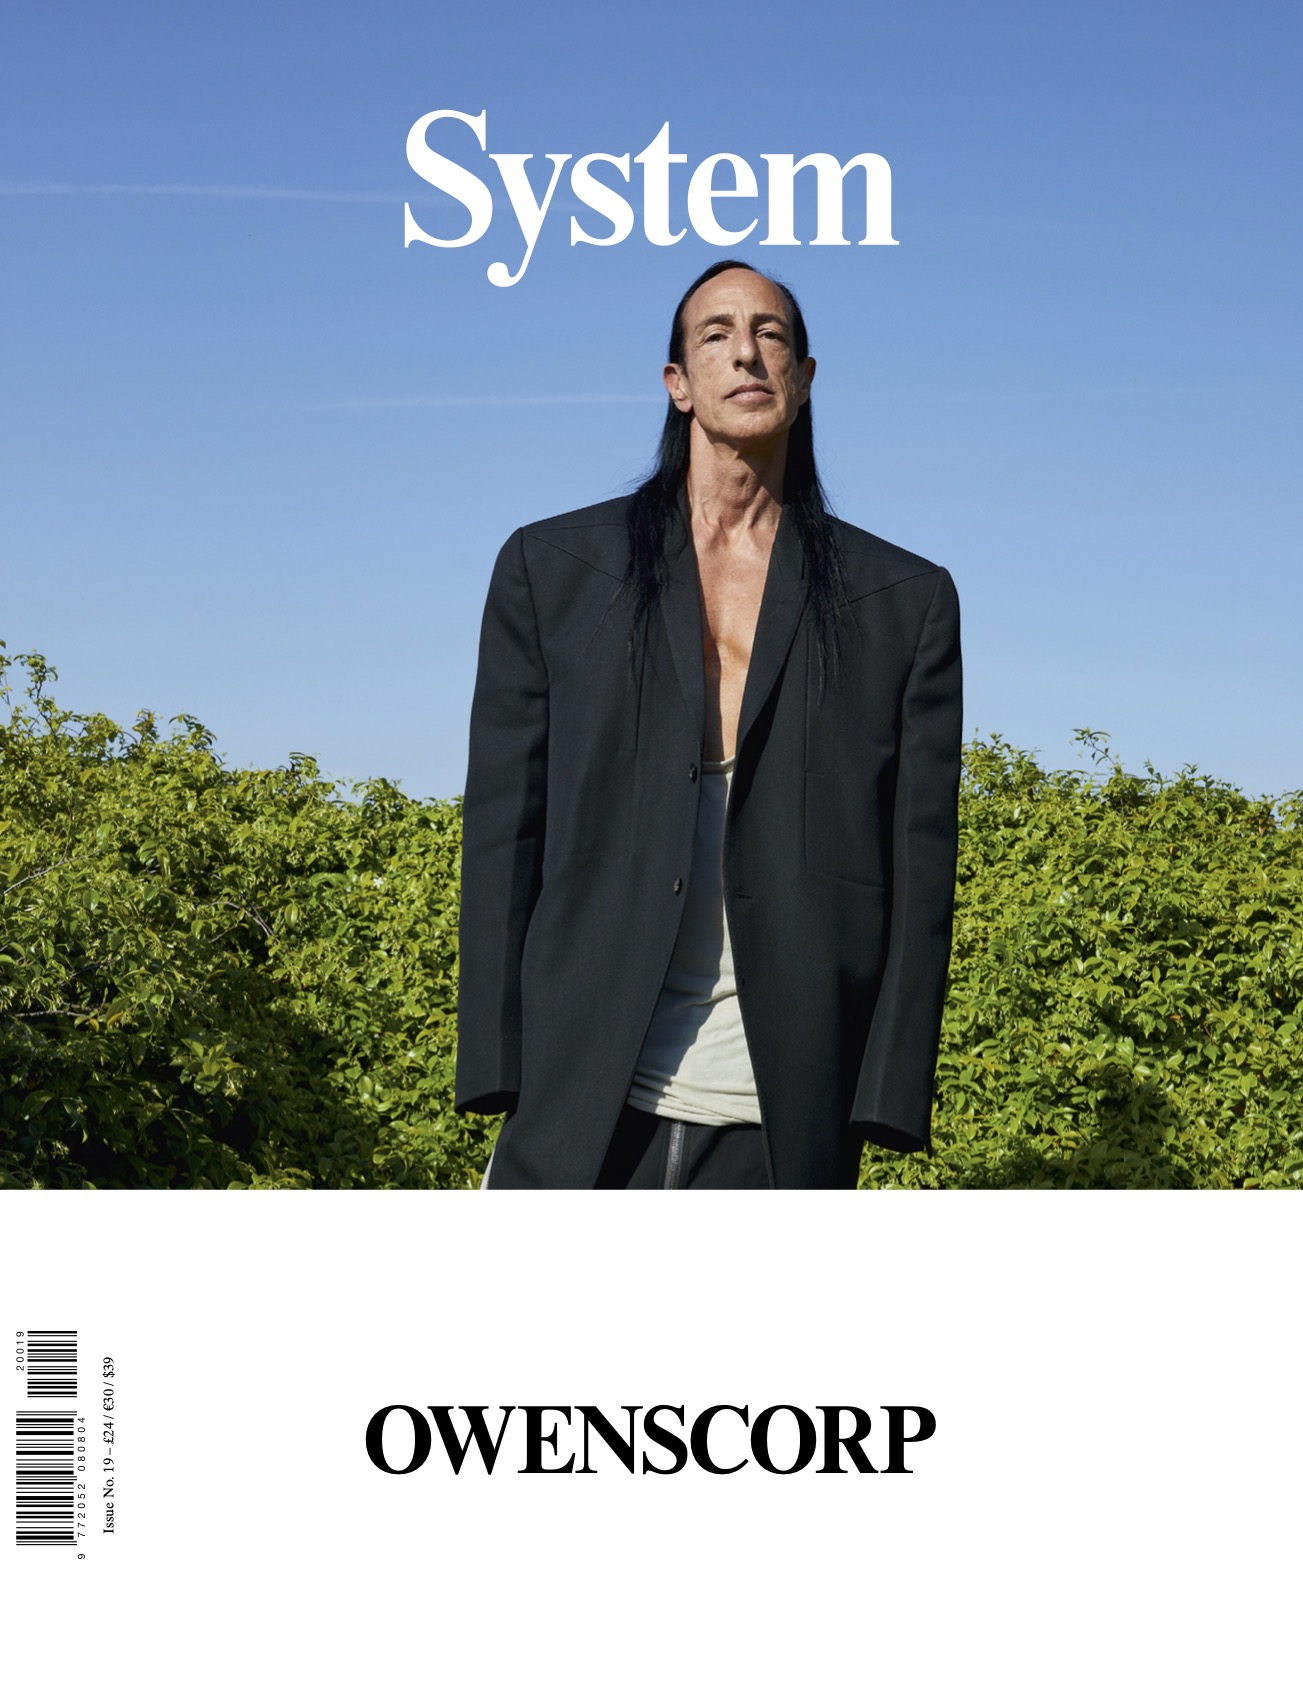 In-store. Dior 30 Montaigne. - Issue 19 - System Magazine